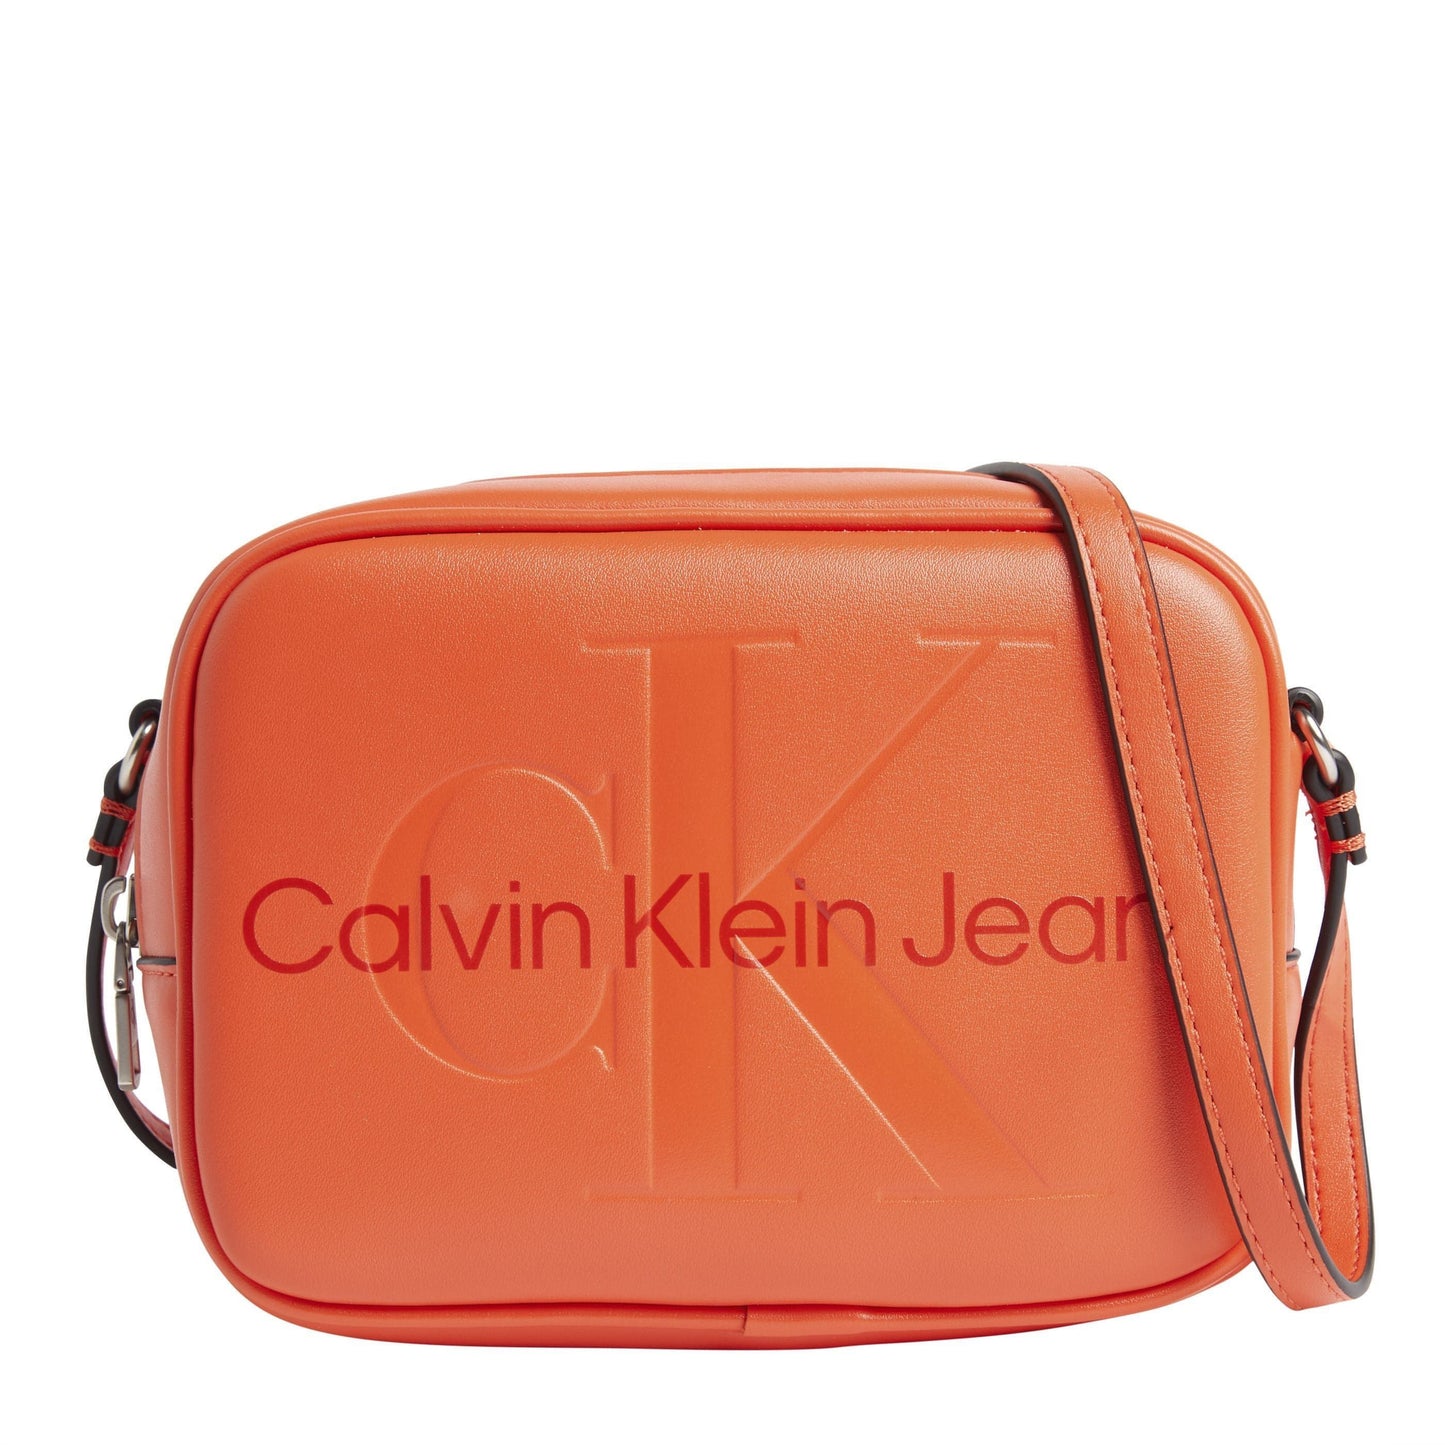 CALVIN KLEIN JEANS moteriška raudona rankinė per petį Sculpted camera bag mono